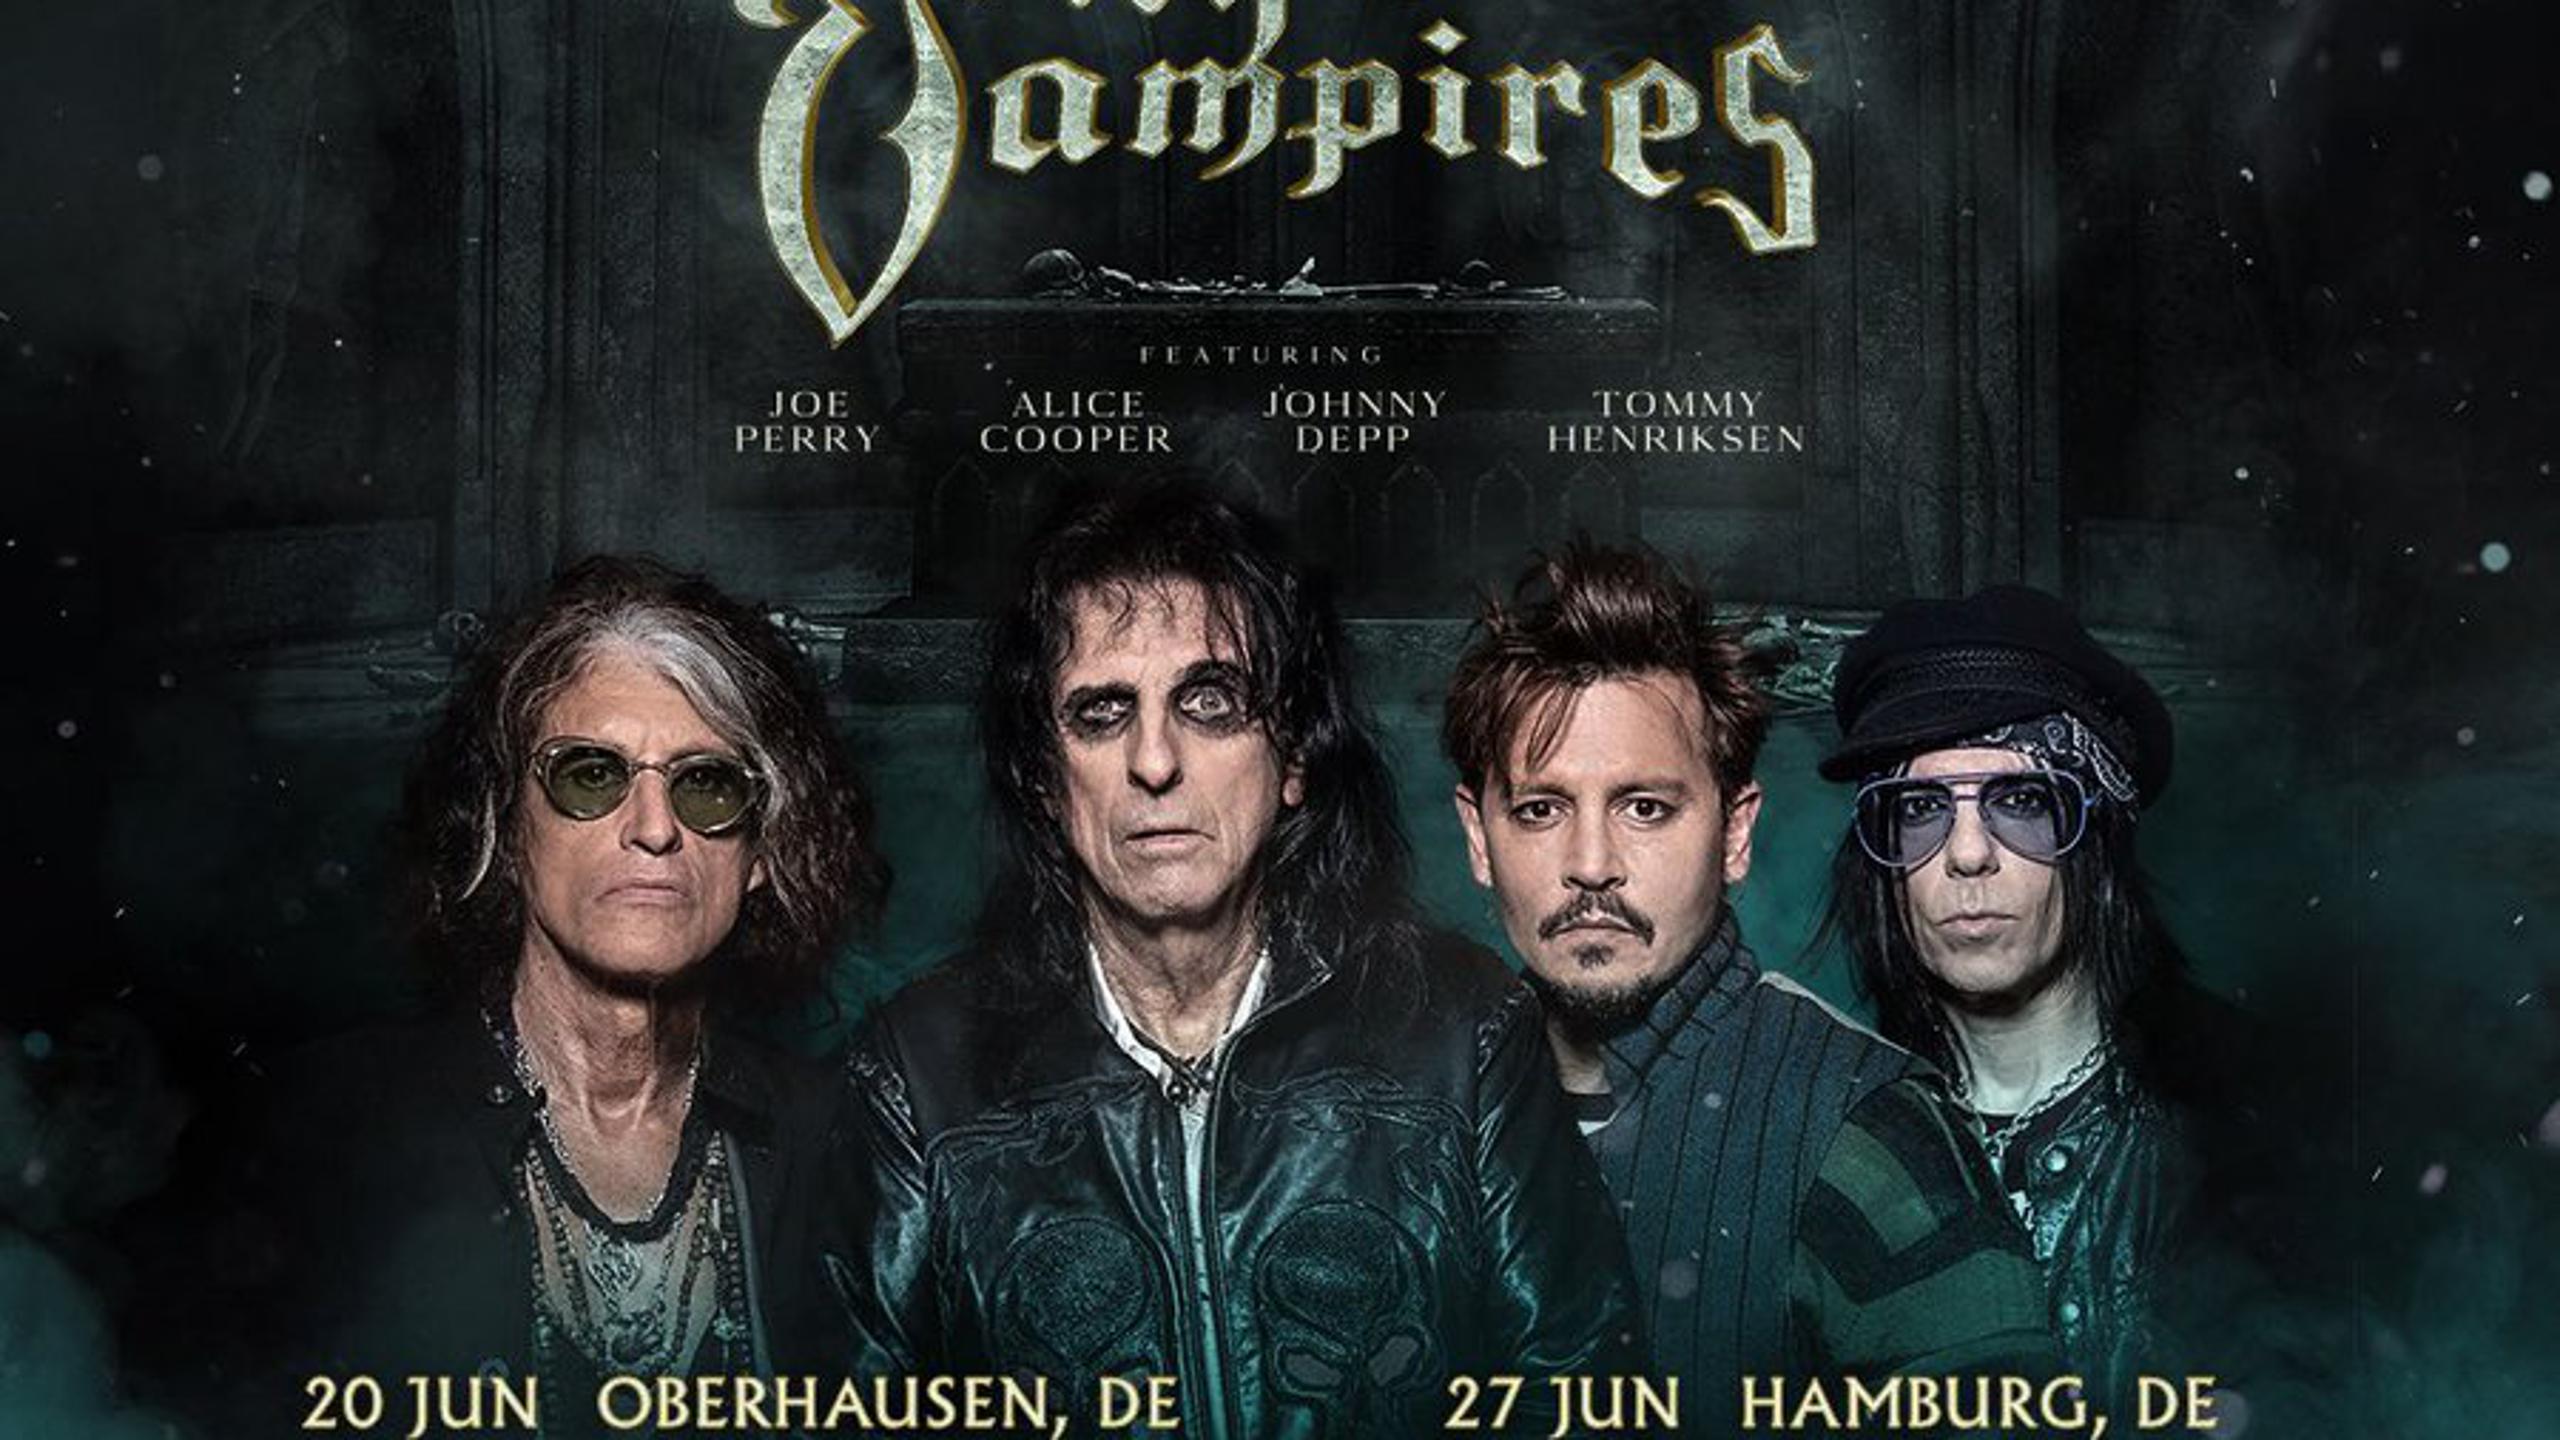 Hollywood Vampires concert tickets for Zitadelle BerlinSpandau, Berlin